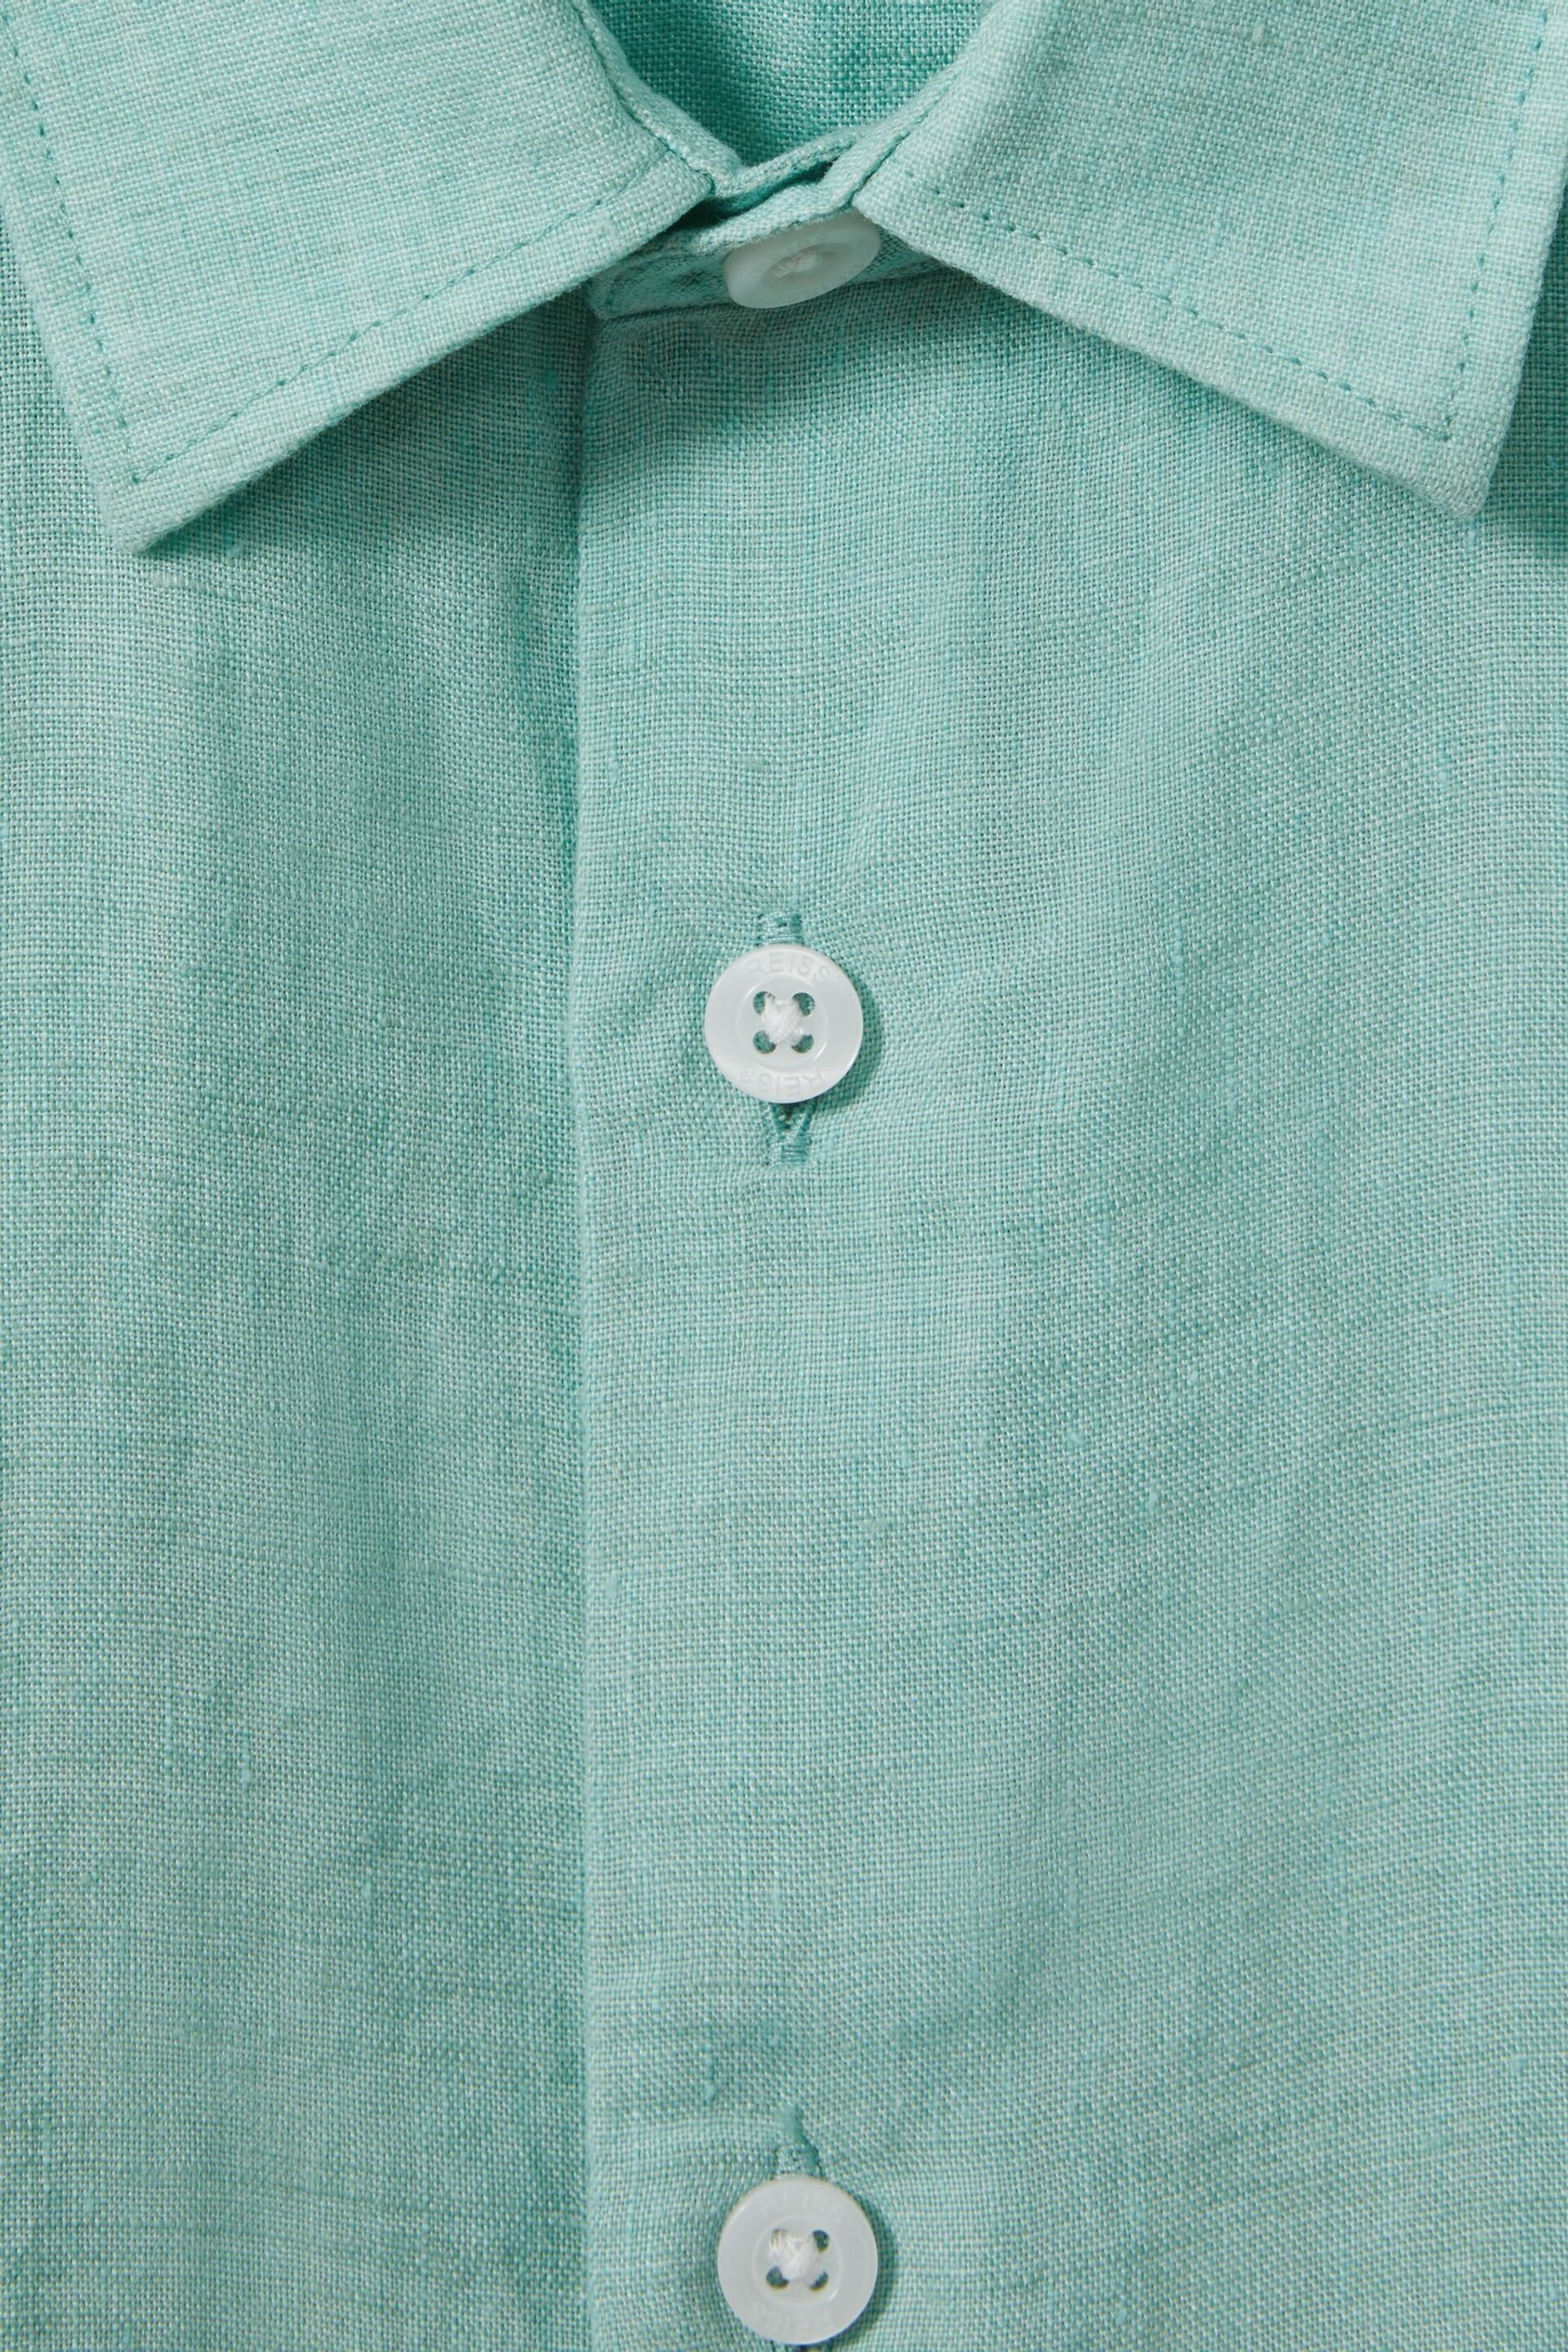 Reiss Bermuda Green Holiday Short Sleeve Linen Shirt - Image 3 of 3